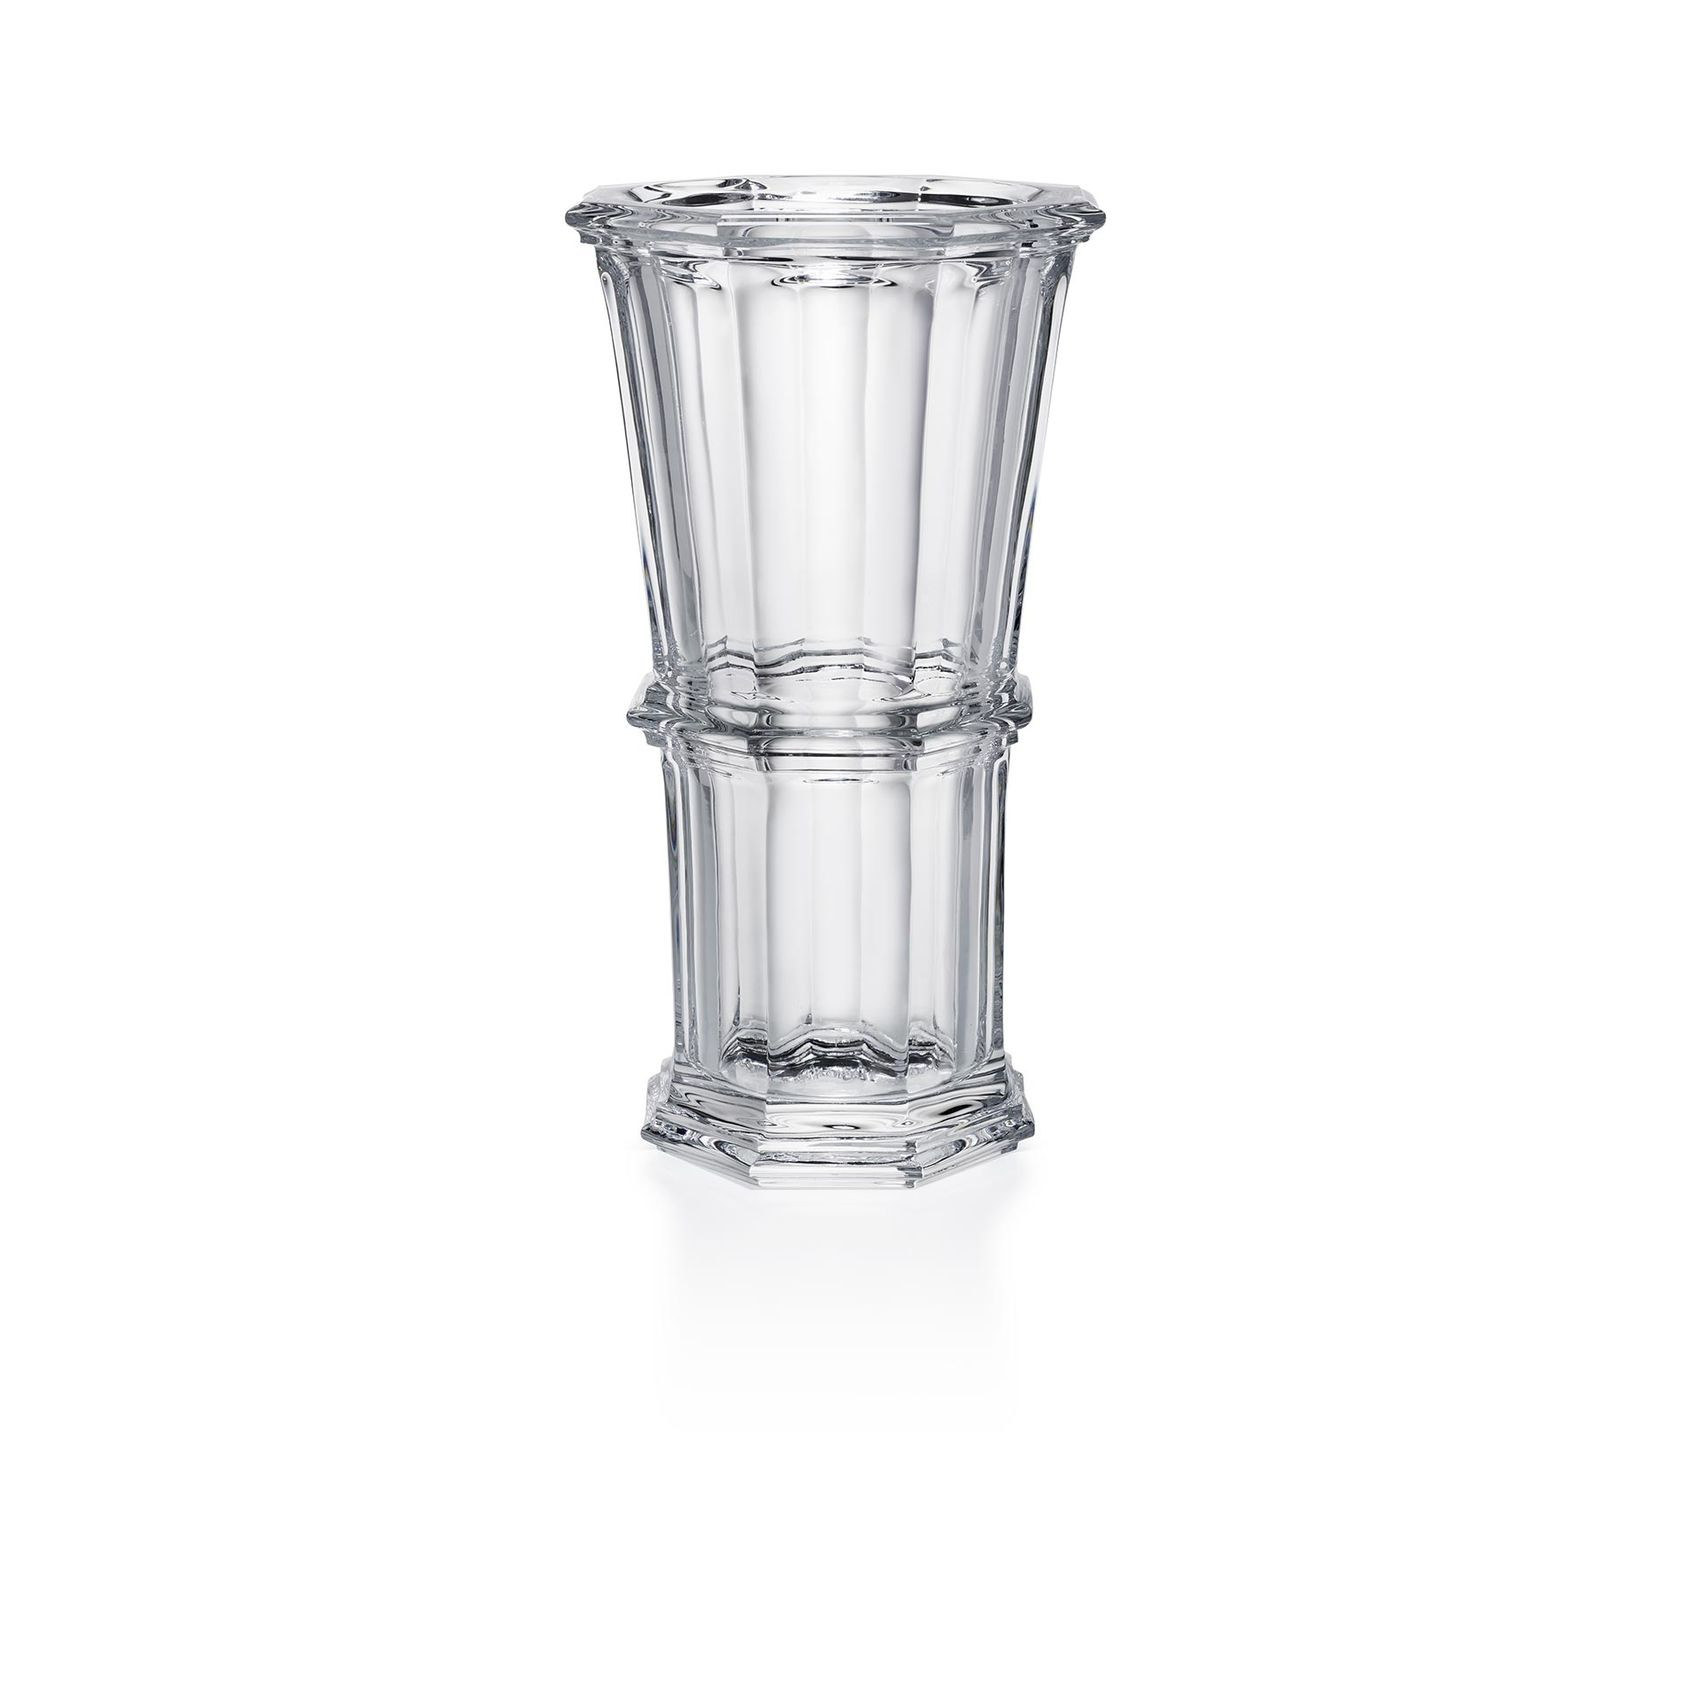 12 Fashionable Baccarat Gingko Crystal Vase 2022 free download baccarat gingko crystal vase of harcourt 1841 vase baccarat with regard to harcourt 1841 vase clear